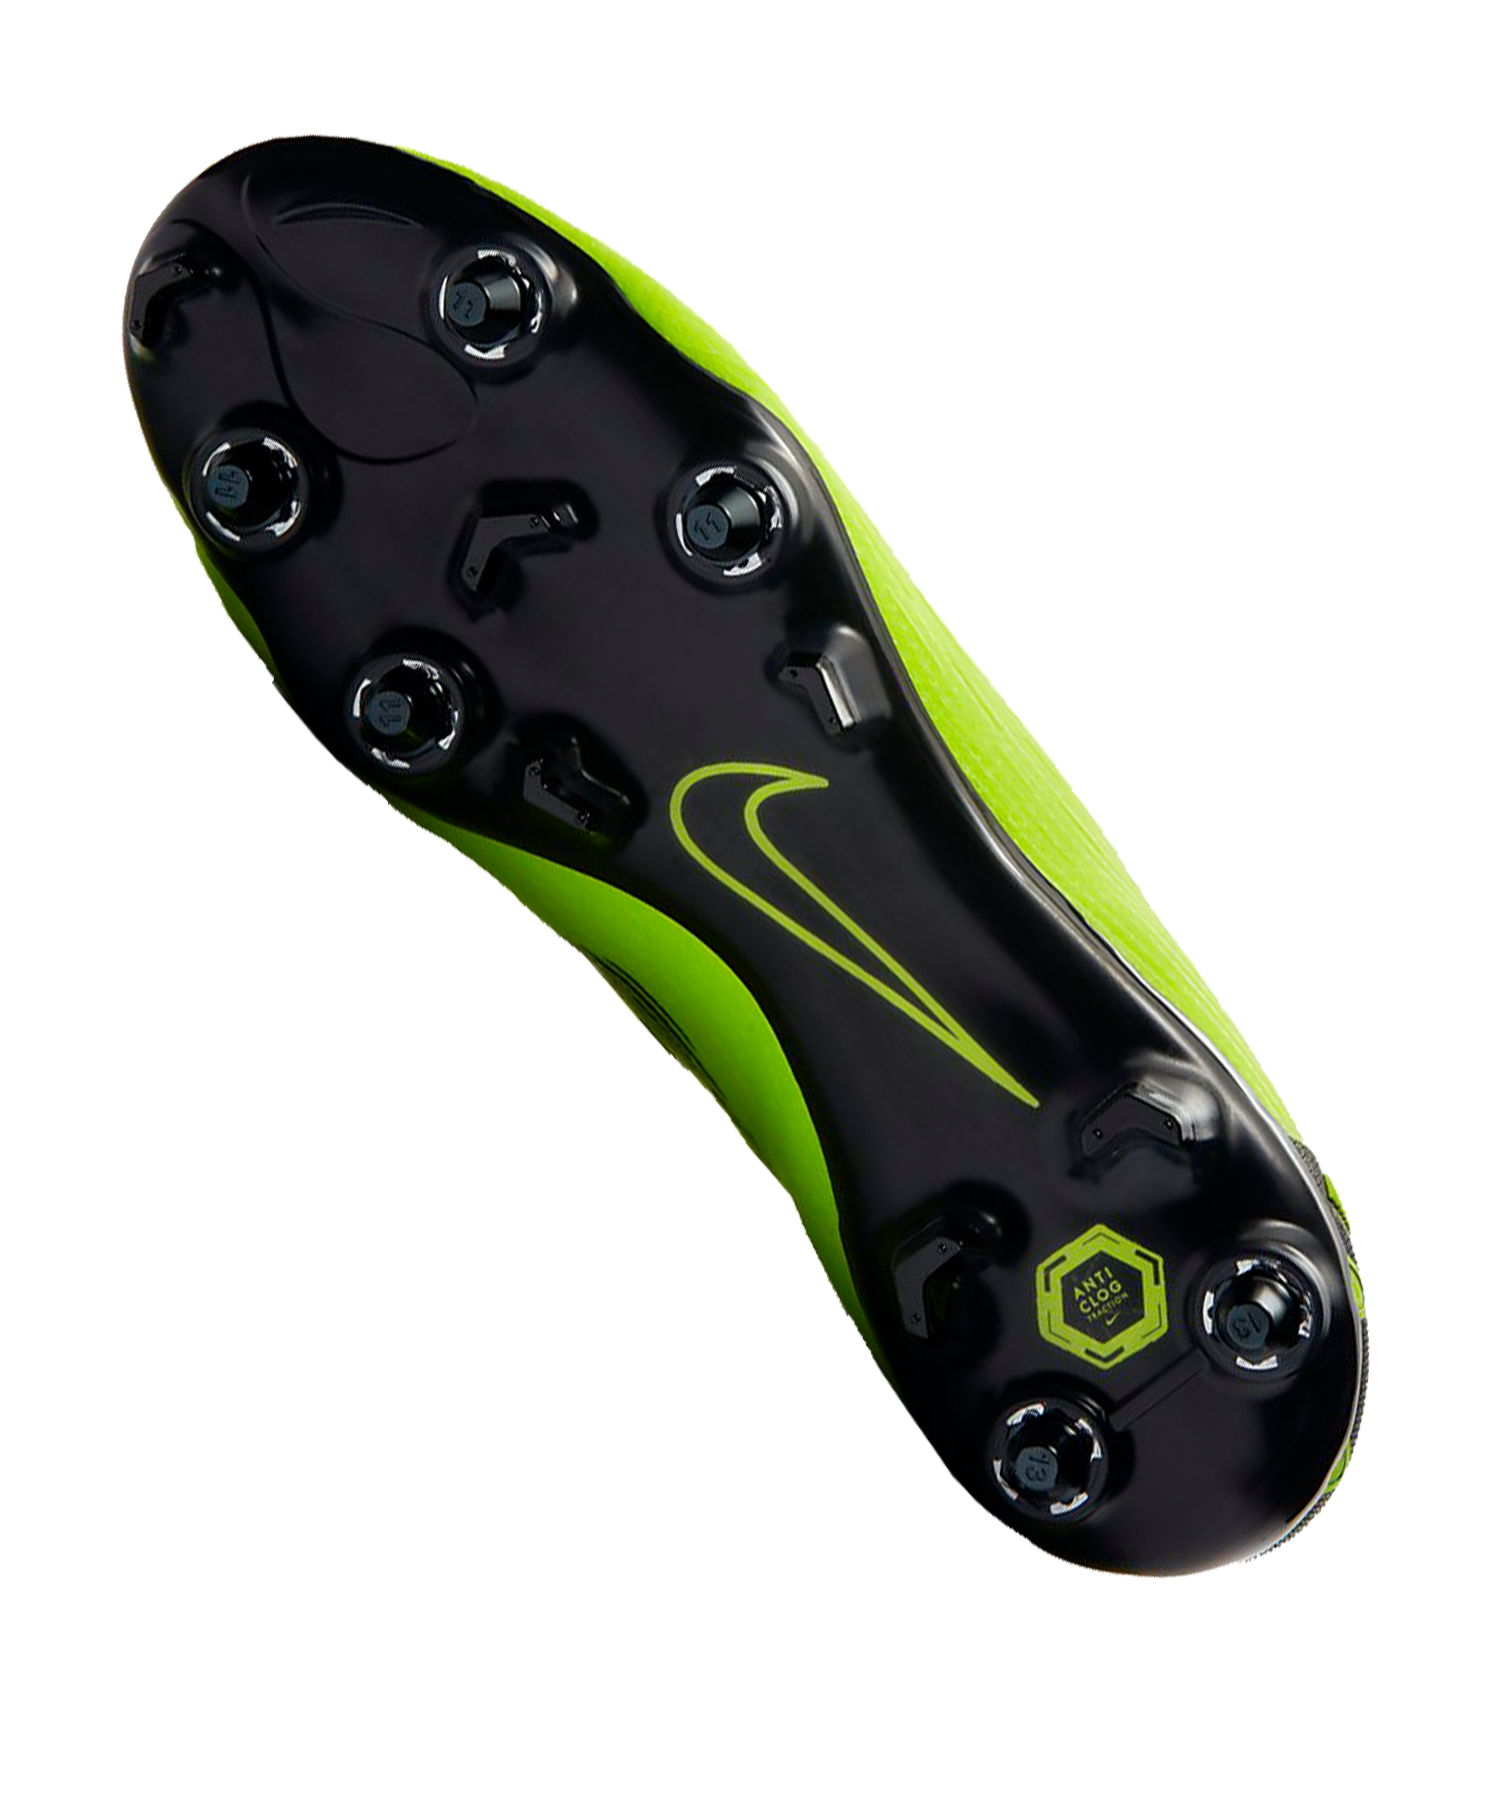 Football boots design Nike Mercurial Superfly VI proxit FG.